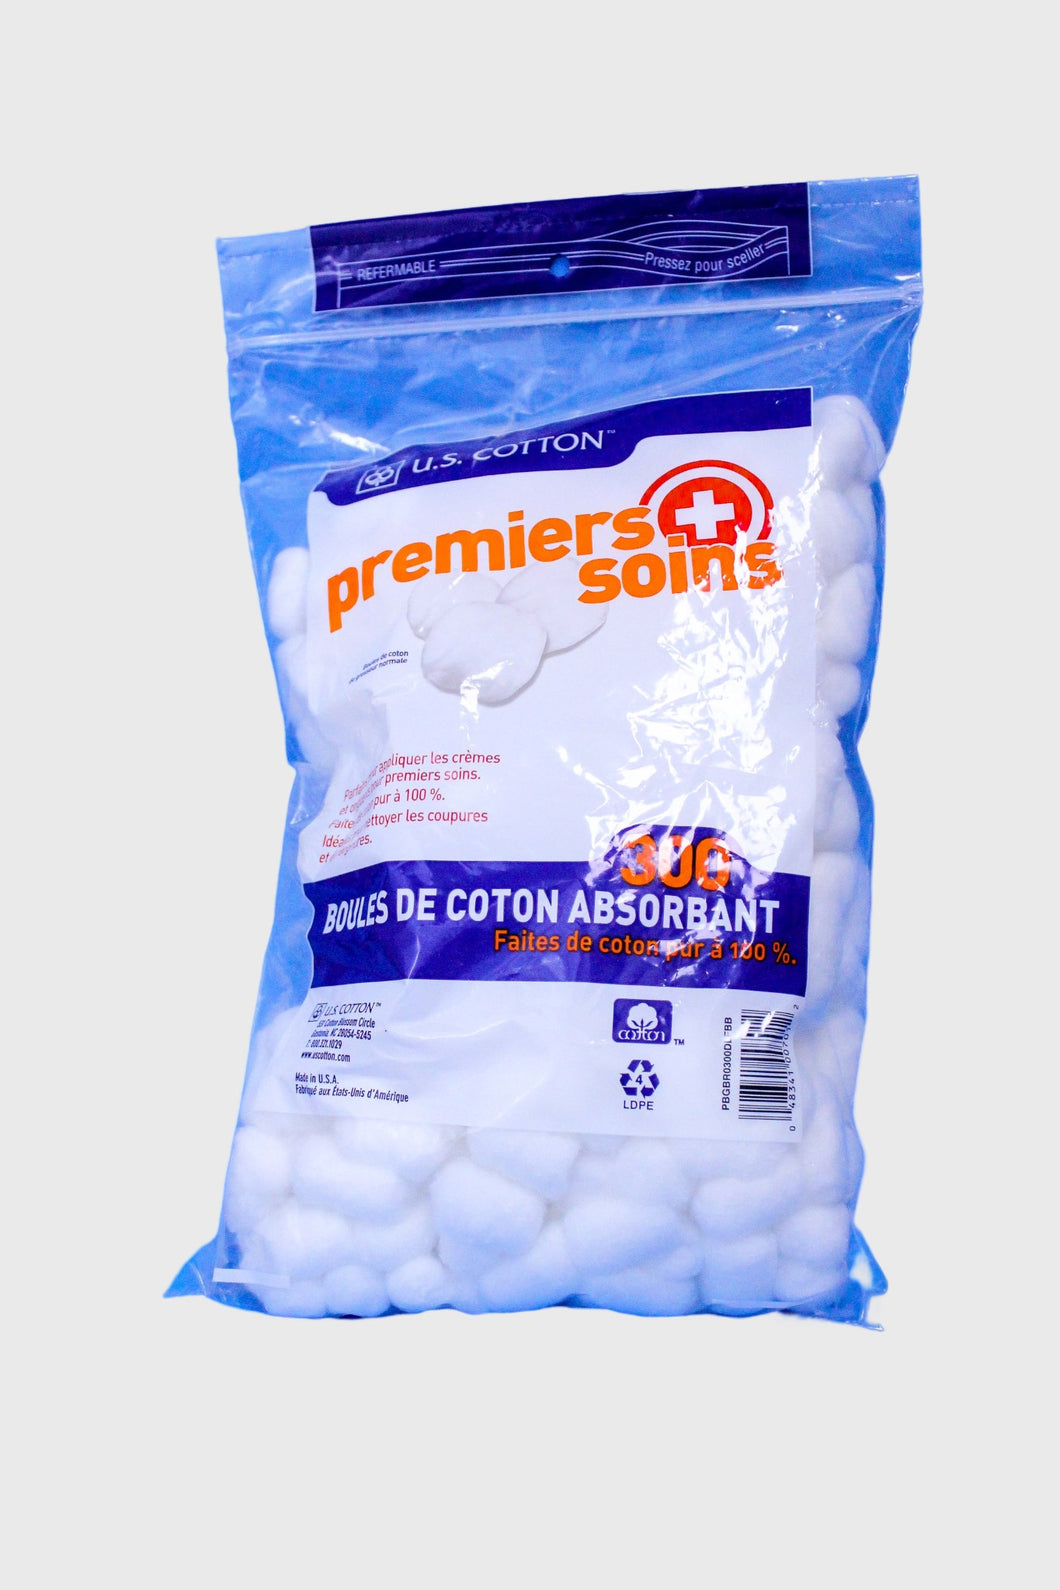 First Aid Absorbent Cotton Balls